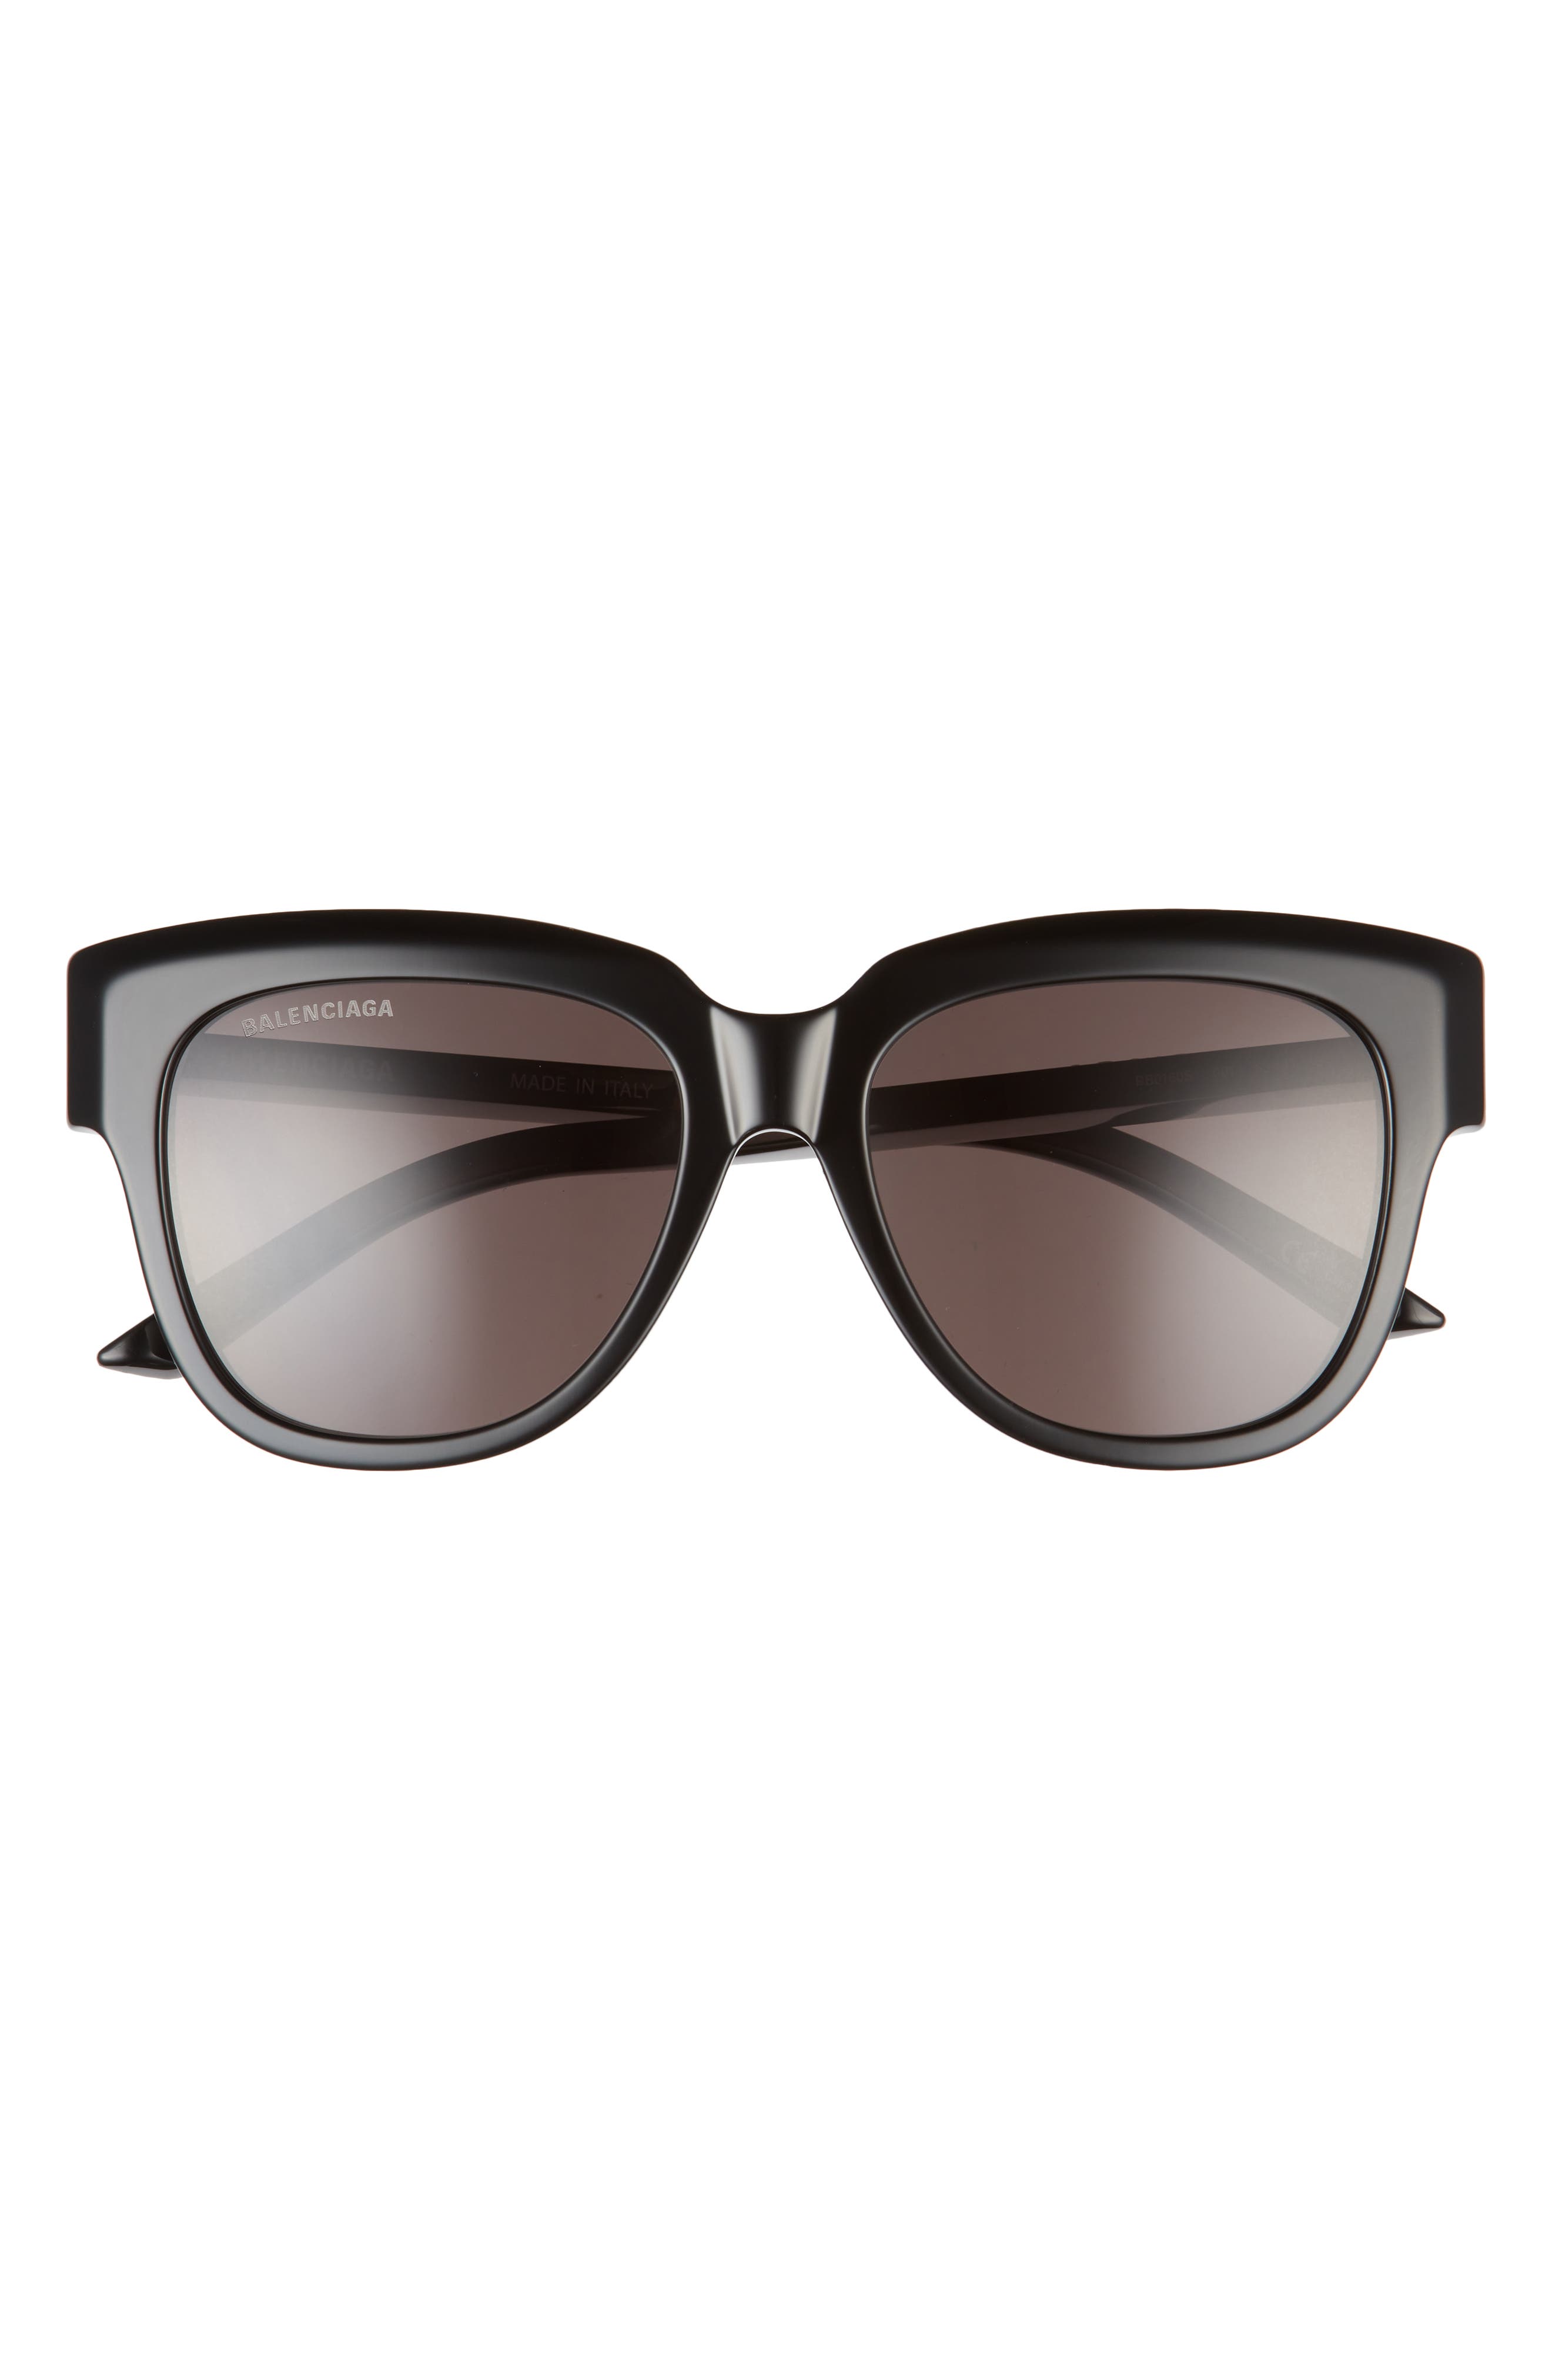 Balenciaga 53mm Rectangular Sunglasses in Black at Nordstrom